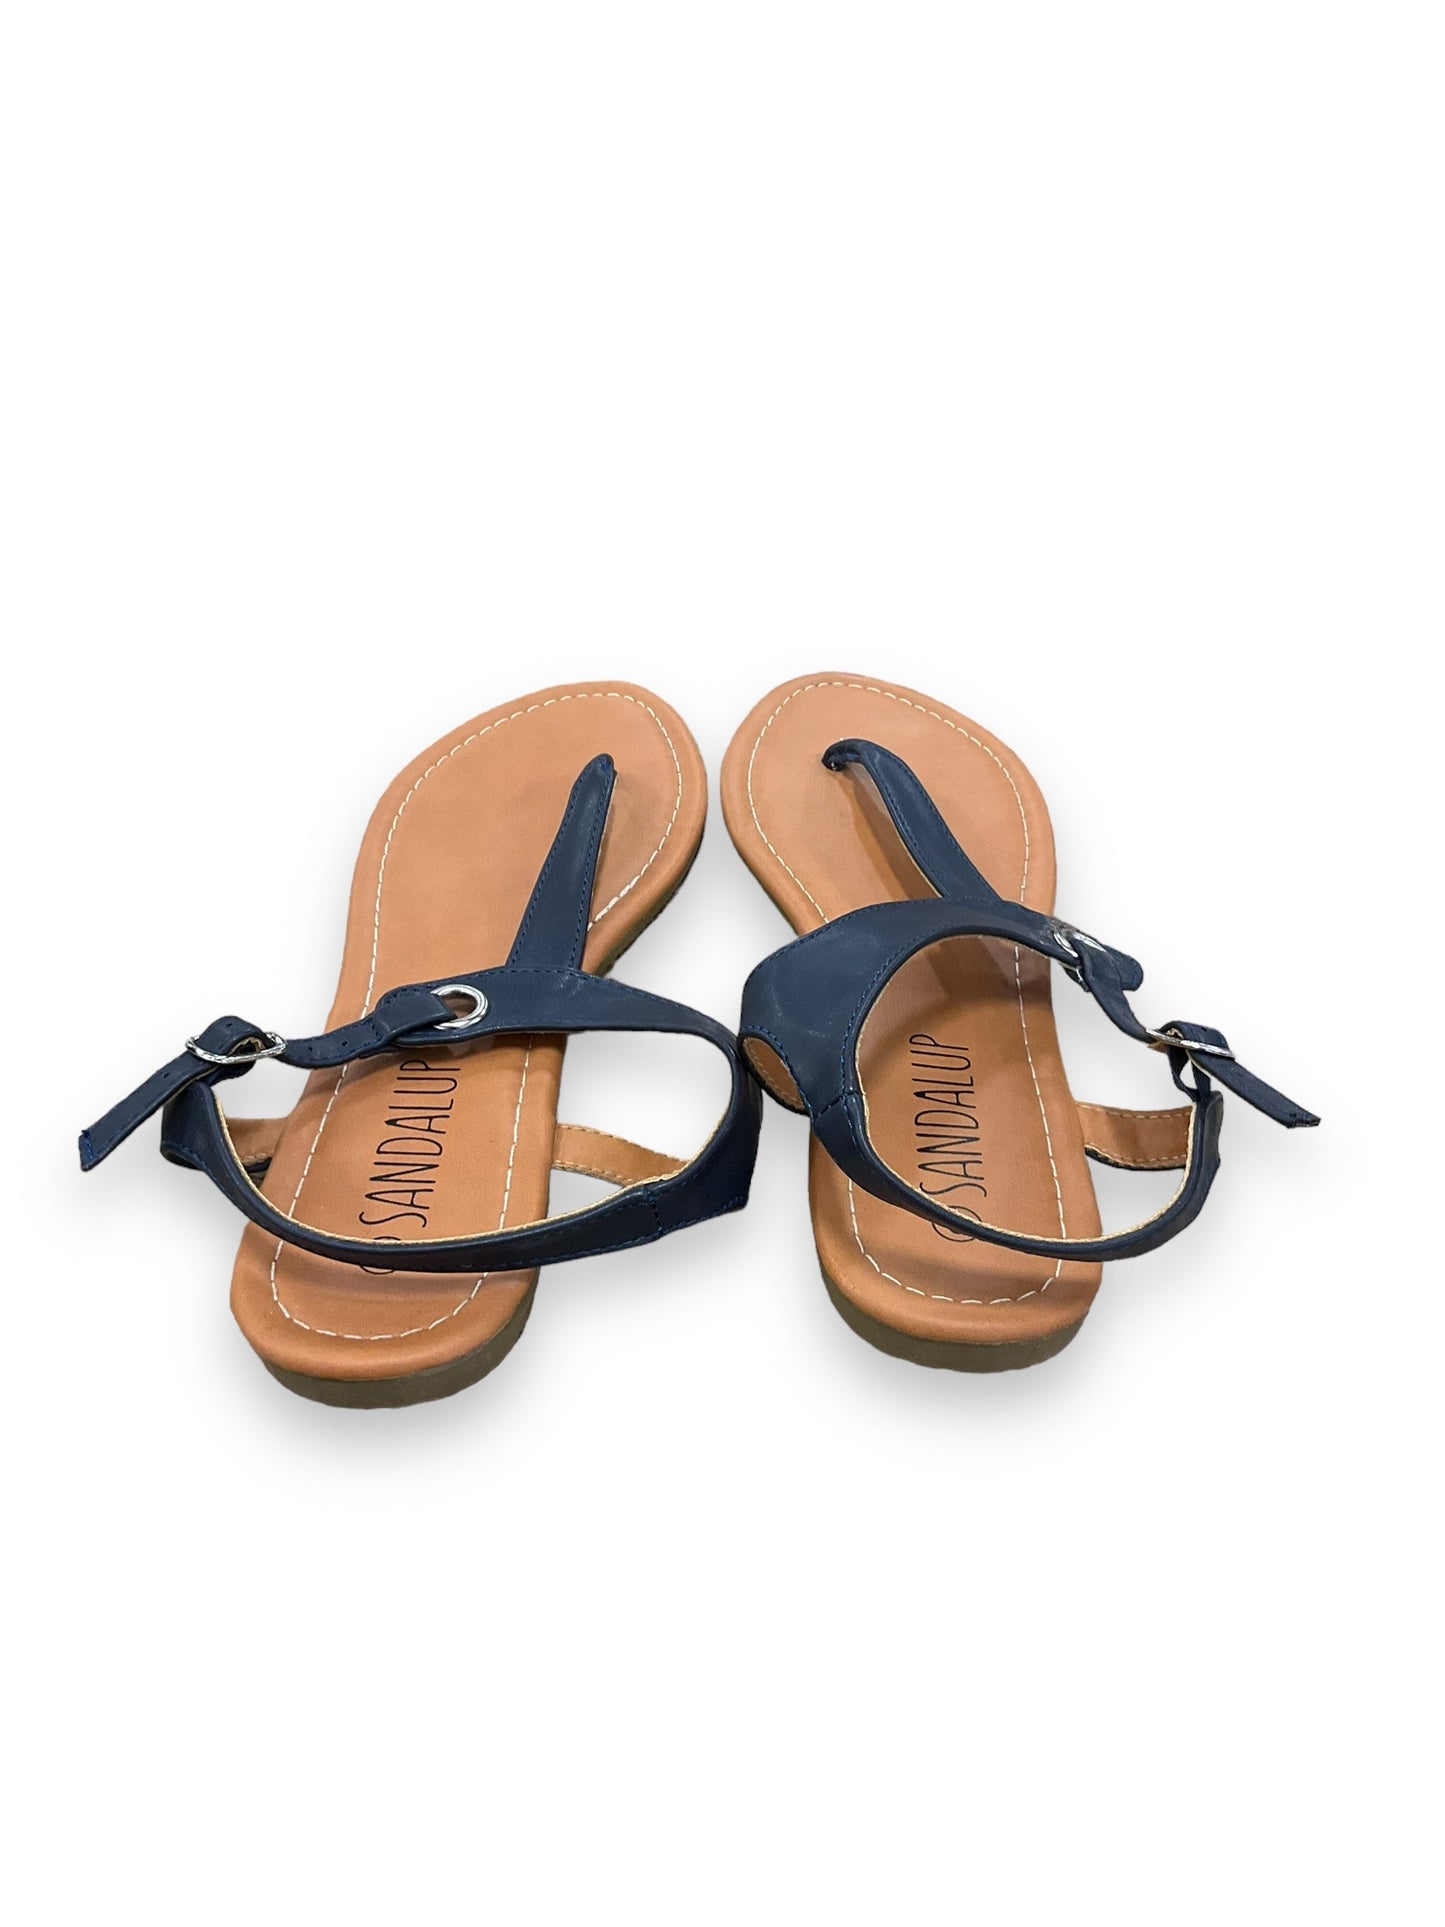 Blue & Brown Sandals Flats Clothes Mentor, Size 8